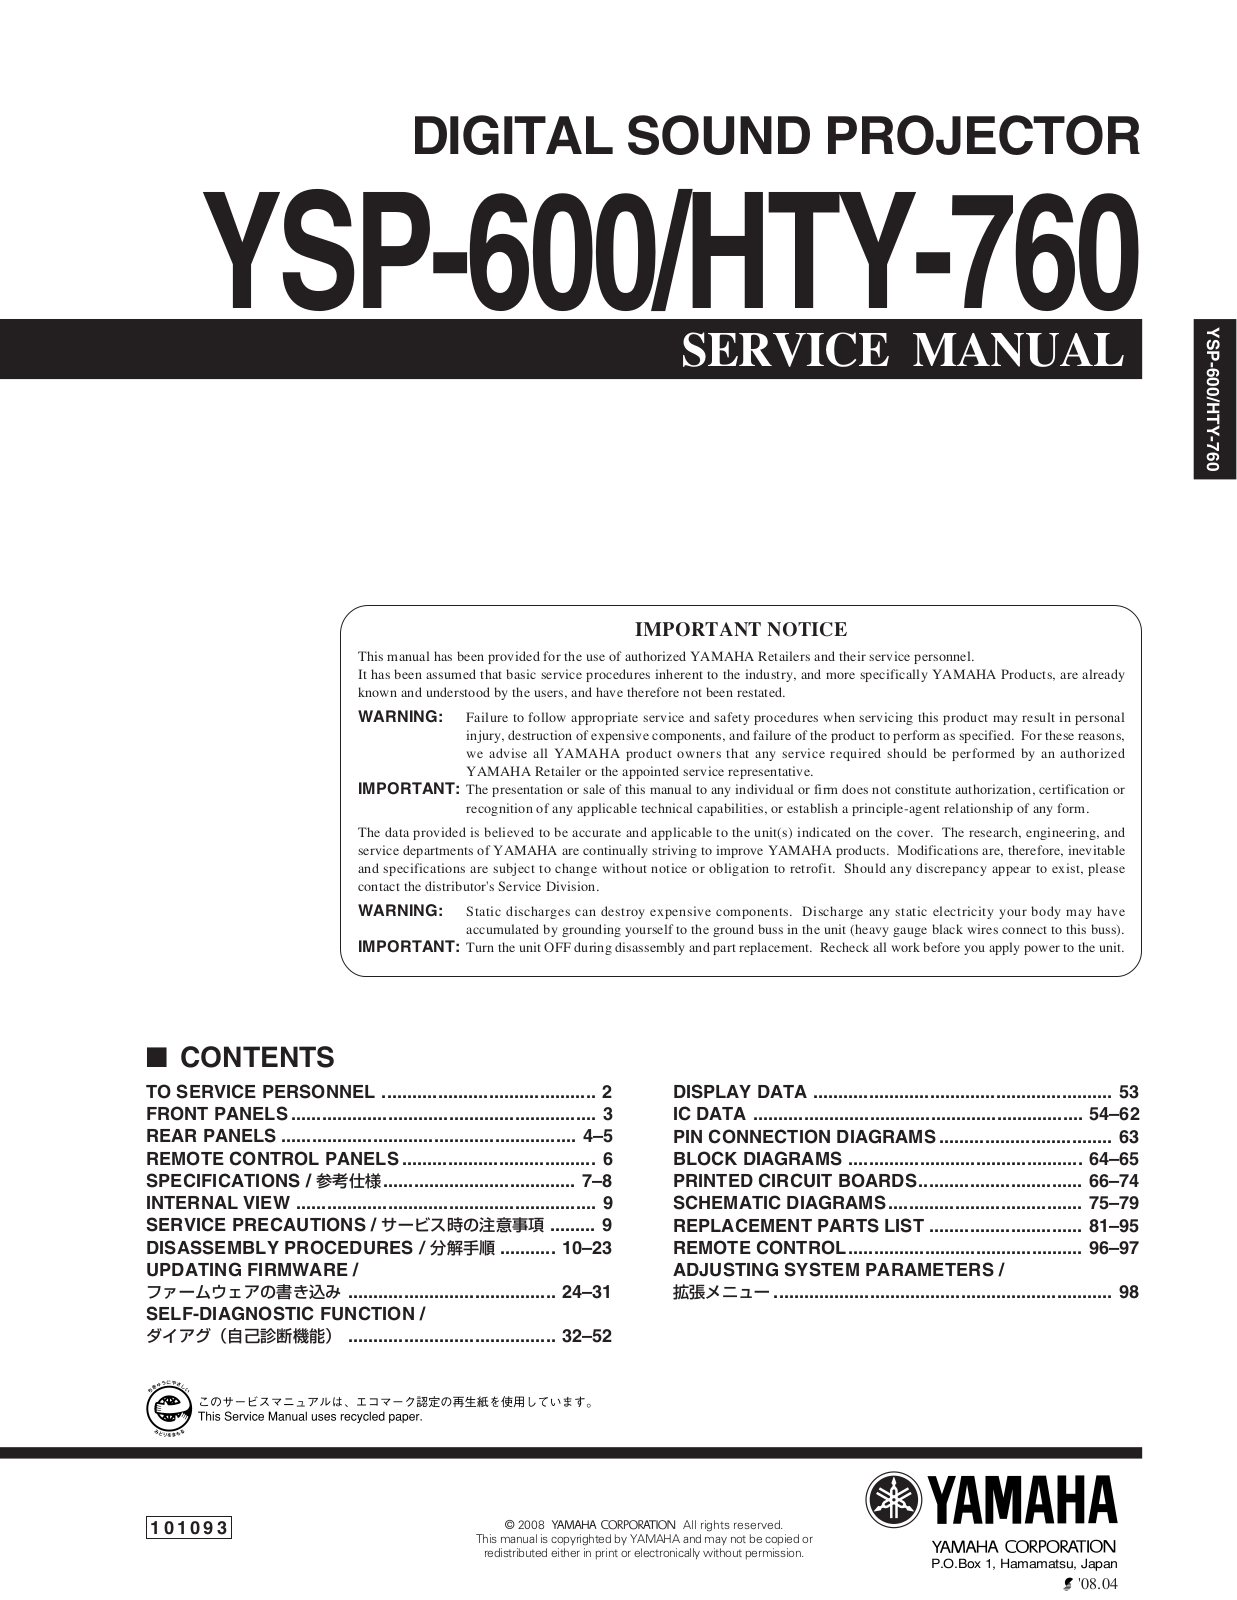 Yamaha YSP-600, HTY-760 Service manual